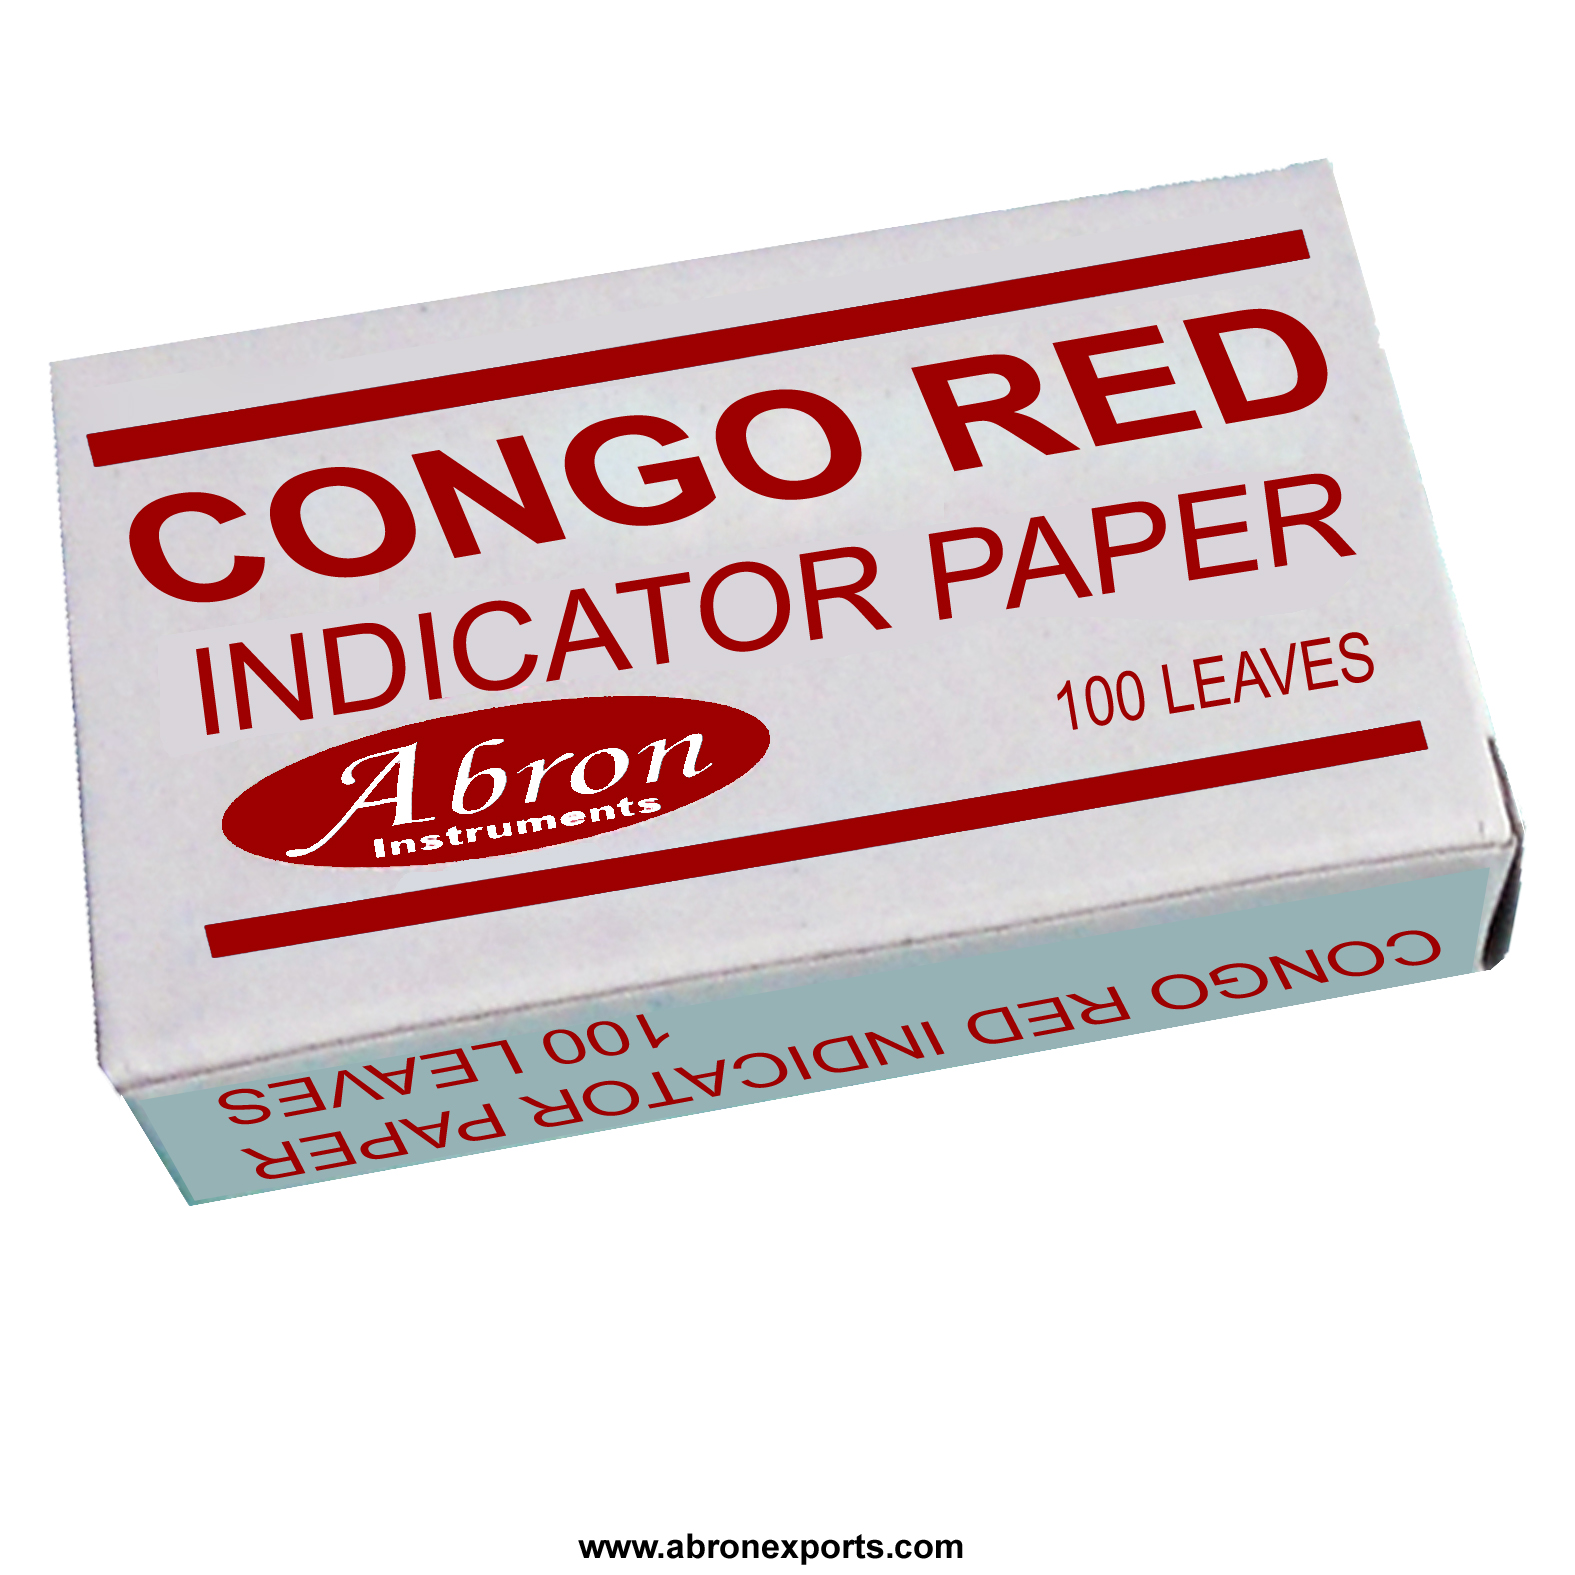 Congo red indicator paper LR 100 lvs abron IP-1126